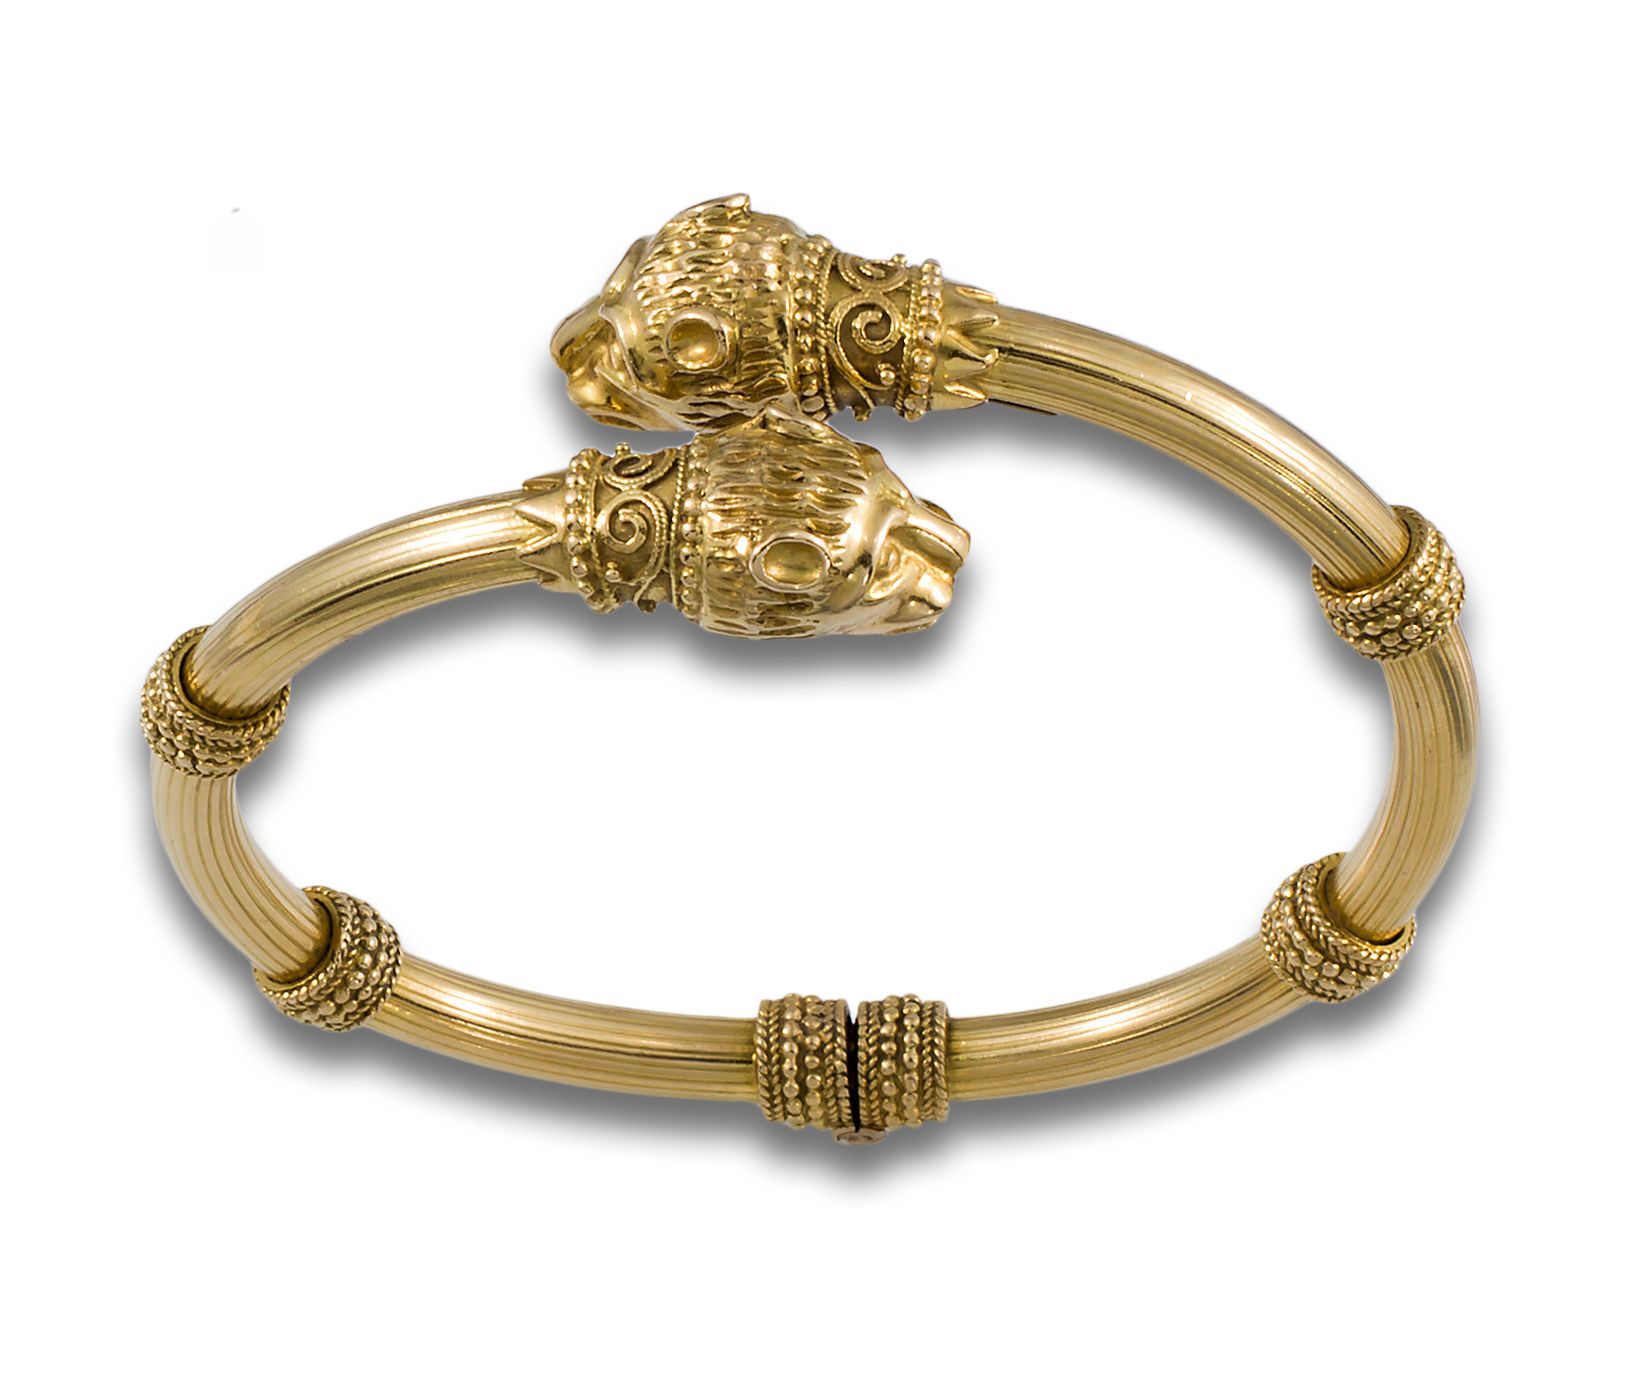 BRACELET GOLD ZOLOTAS FELINES 半刚性的ZOLOTAS手镯，18K黄金，条纹箍穿插着半球的箍，顶部有猫头，重量为45克。.